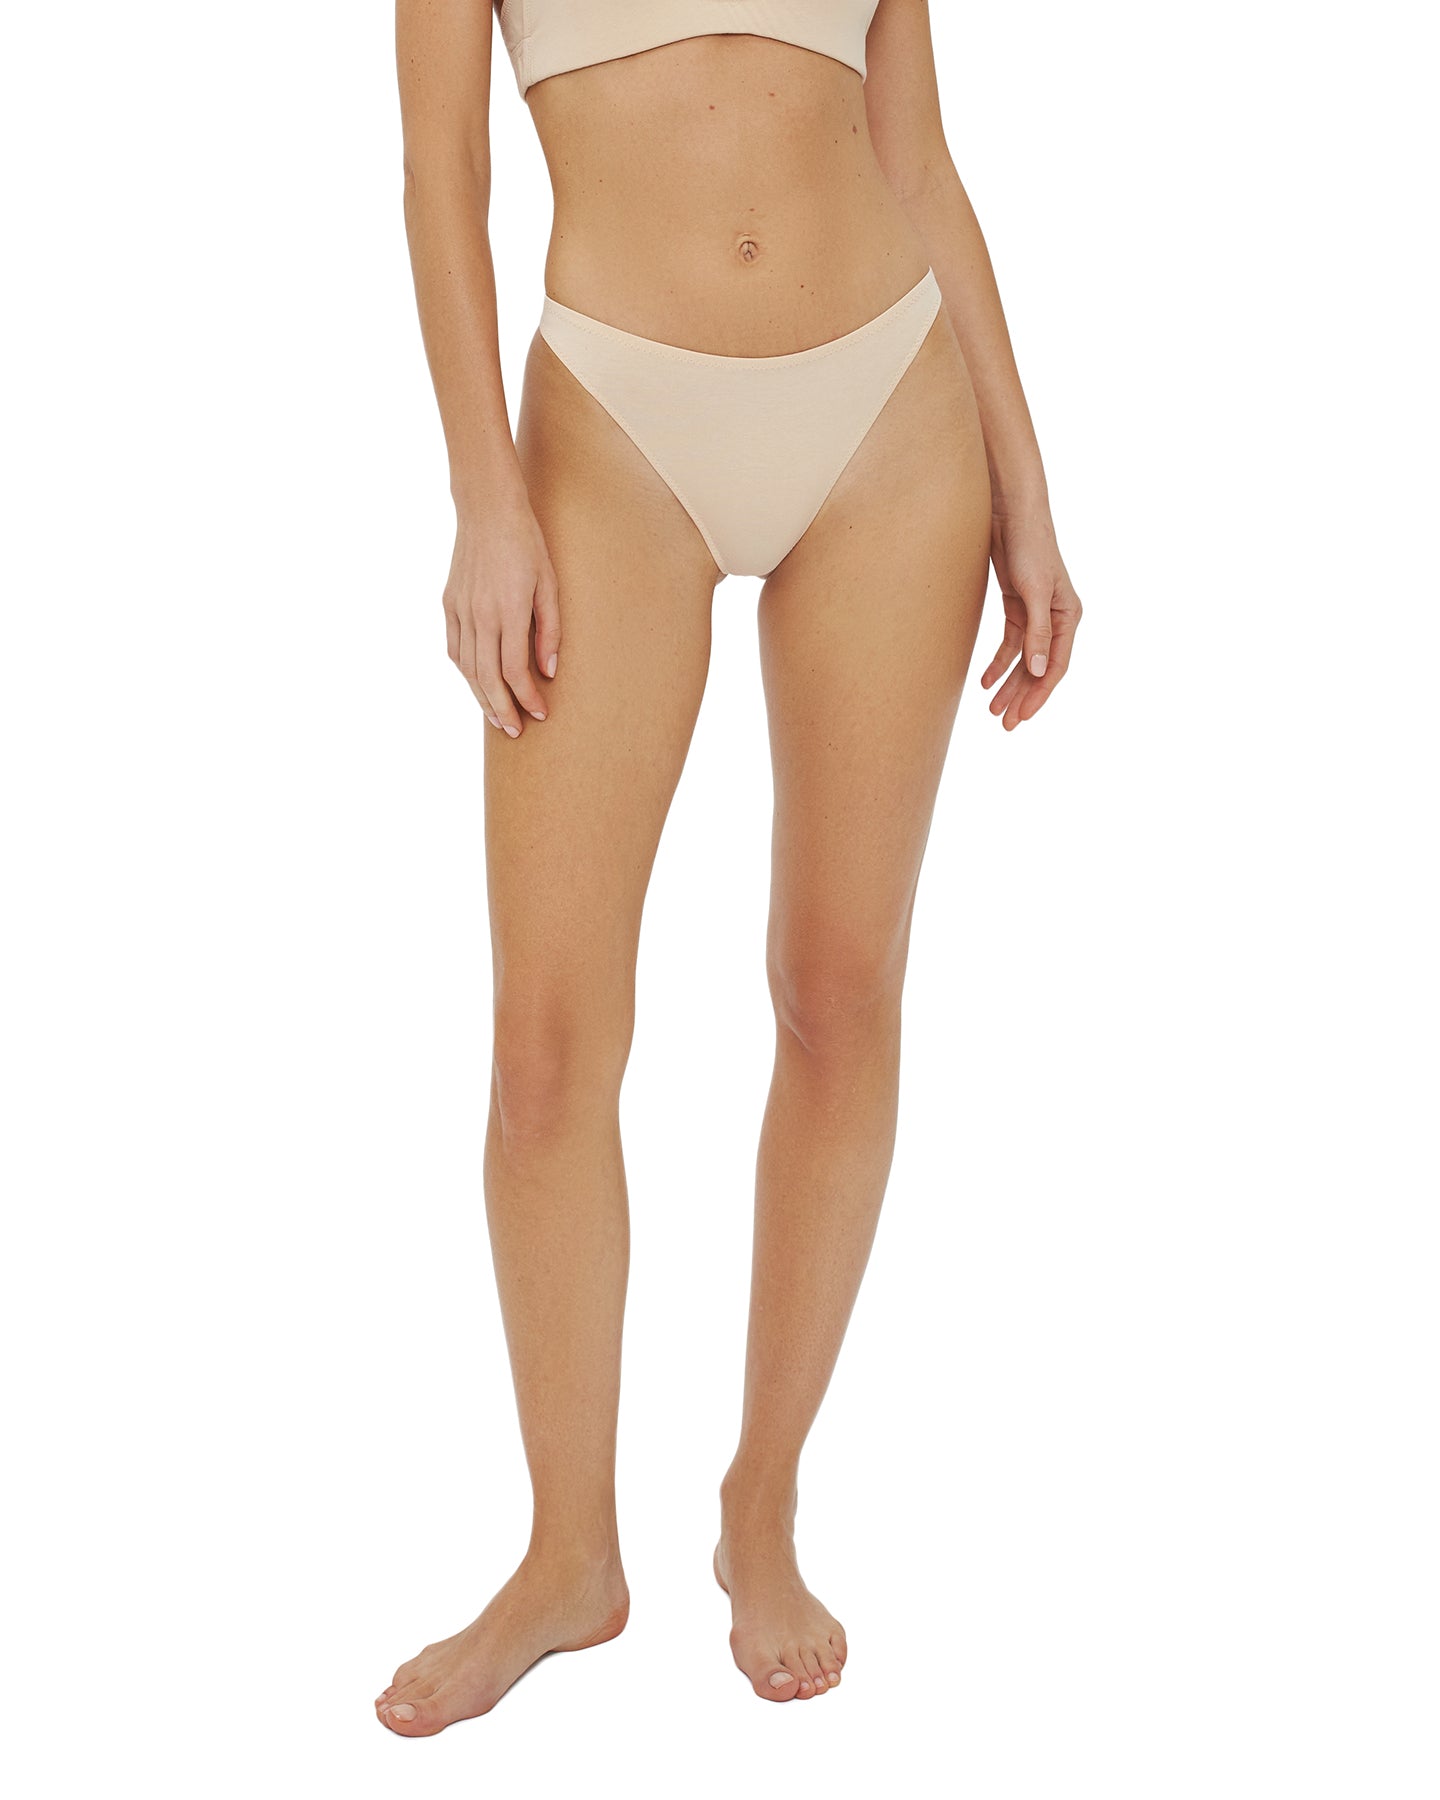 Nude organic cotton underwear | Women's underwear | high waisted thong | Lyzawear